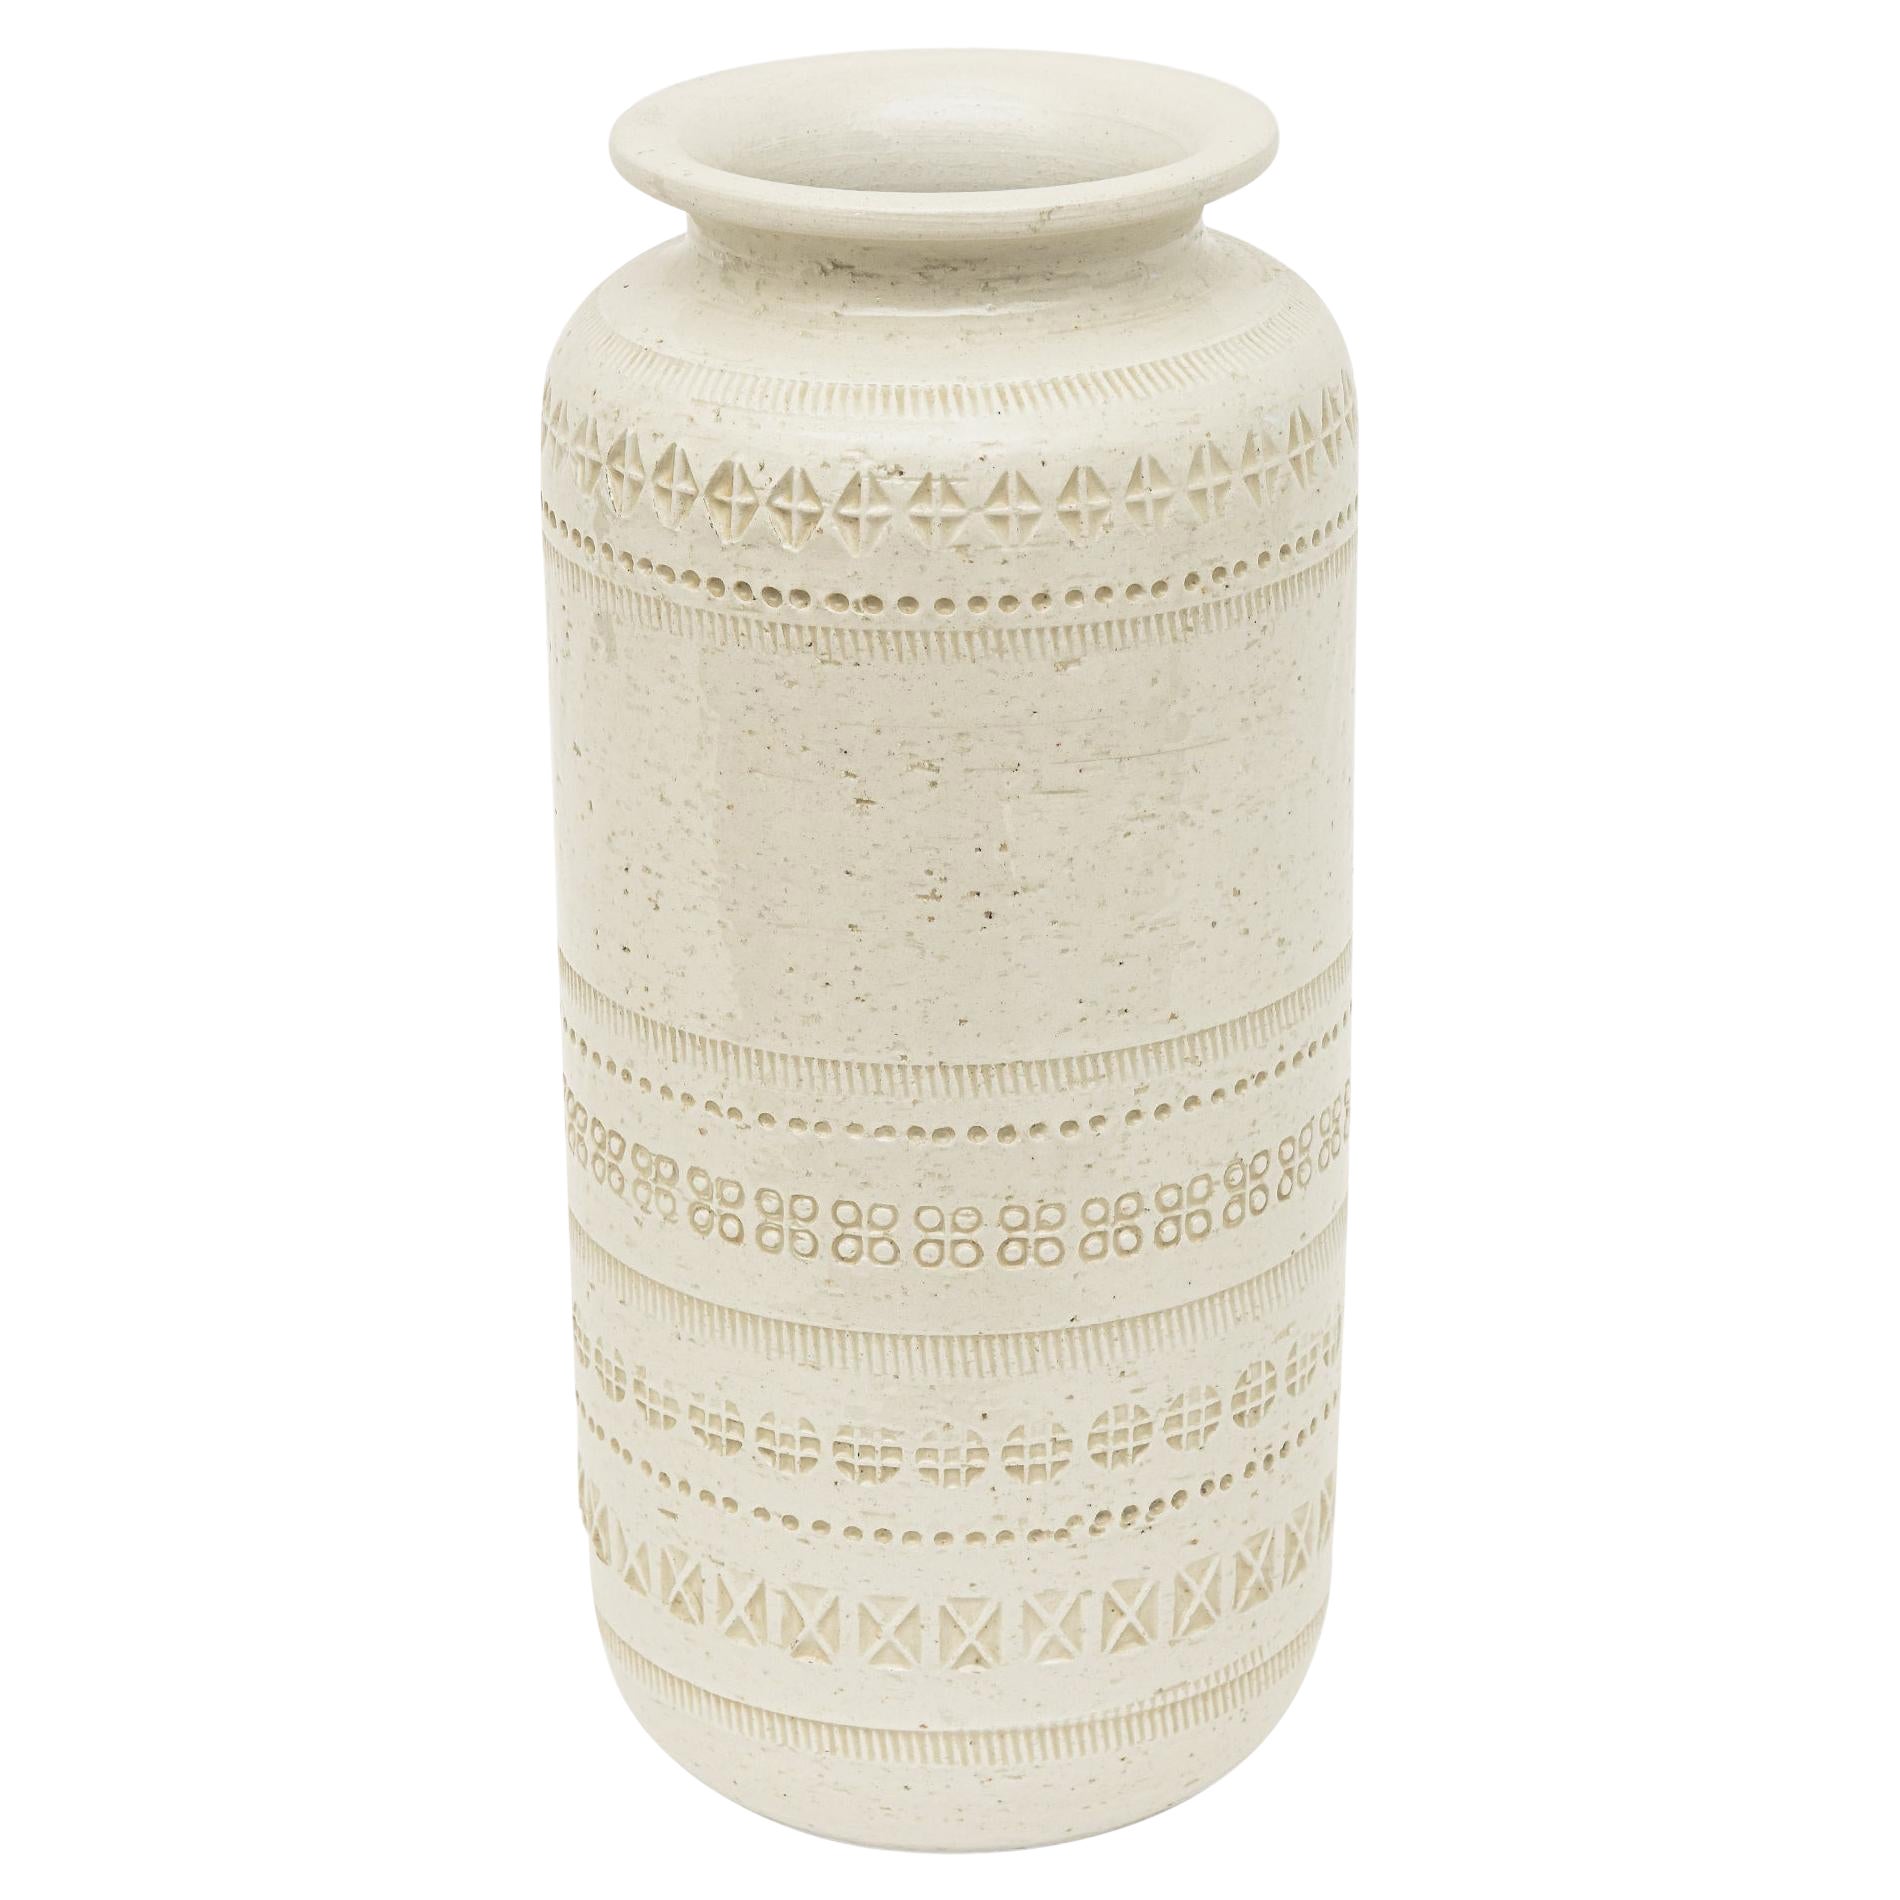 Bitossi Texturierte Vintage-Vase aus cremefarbener Keramik, gestempelt